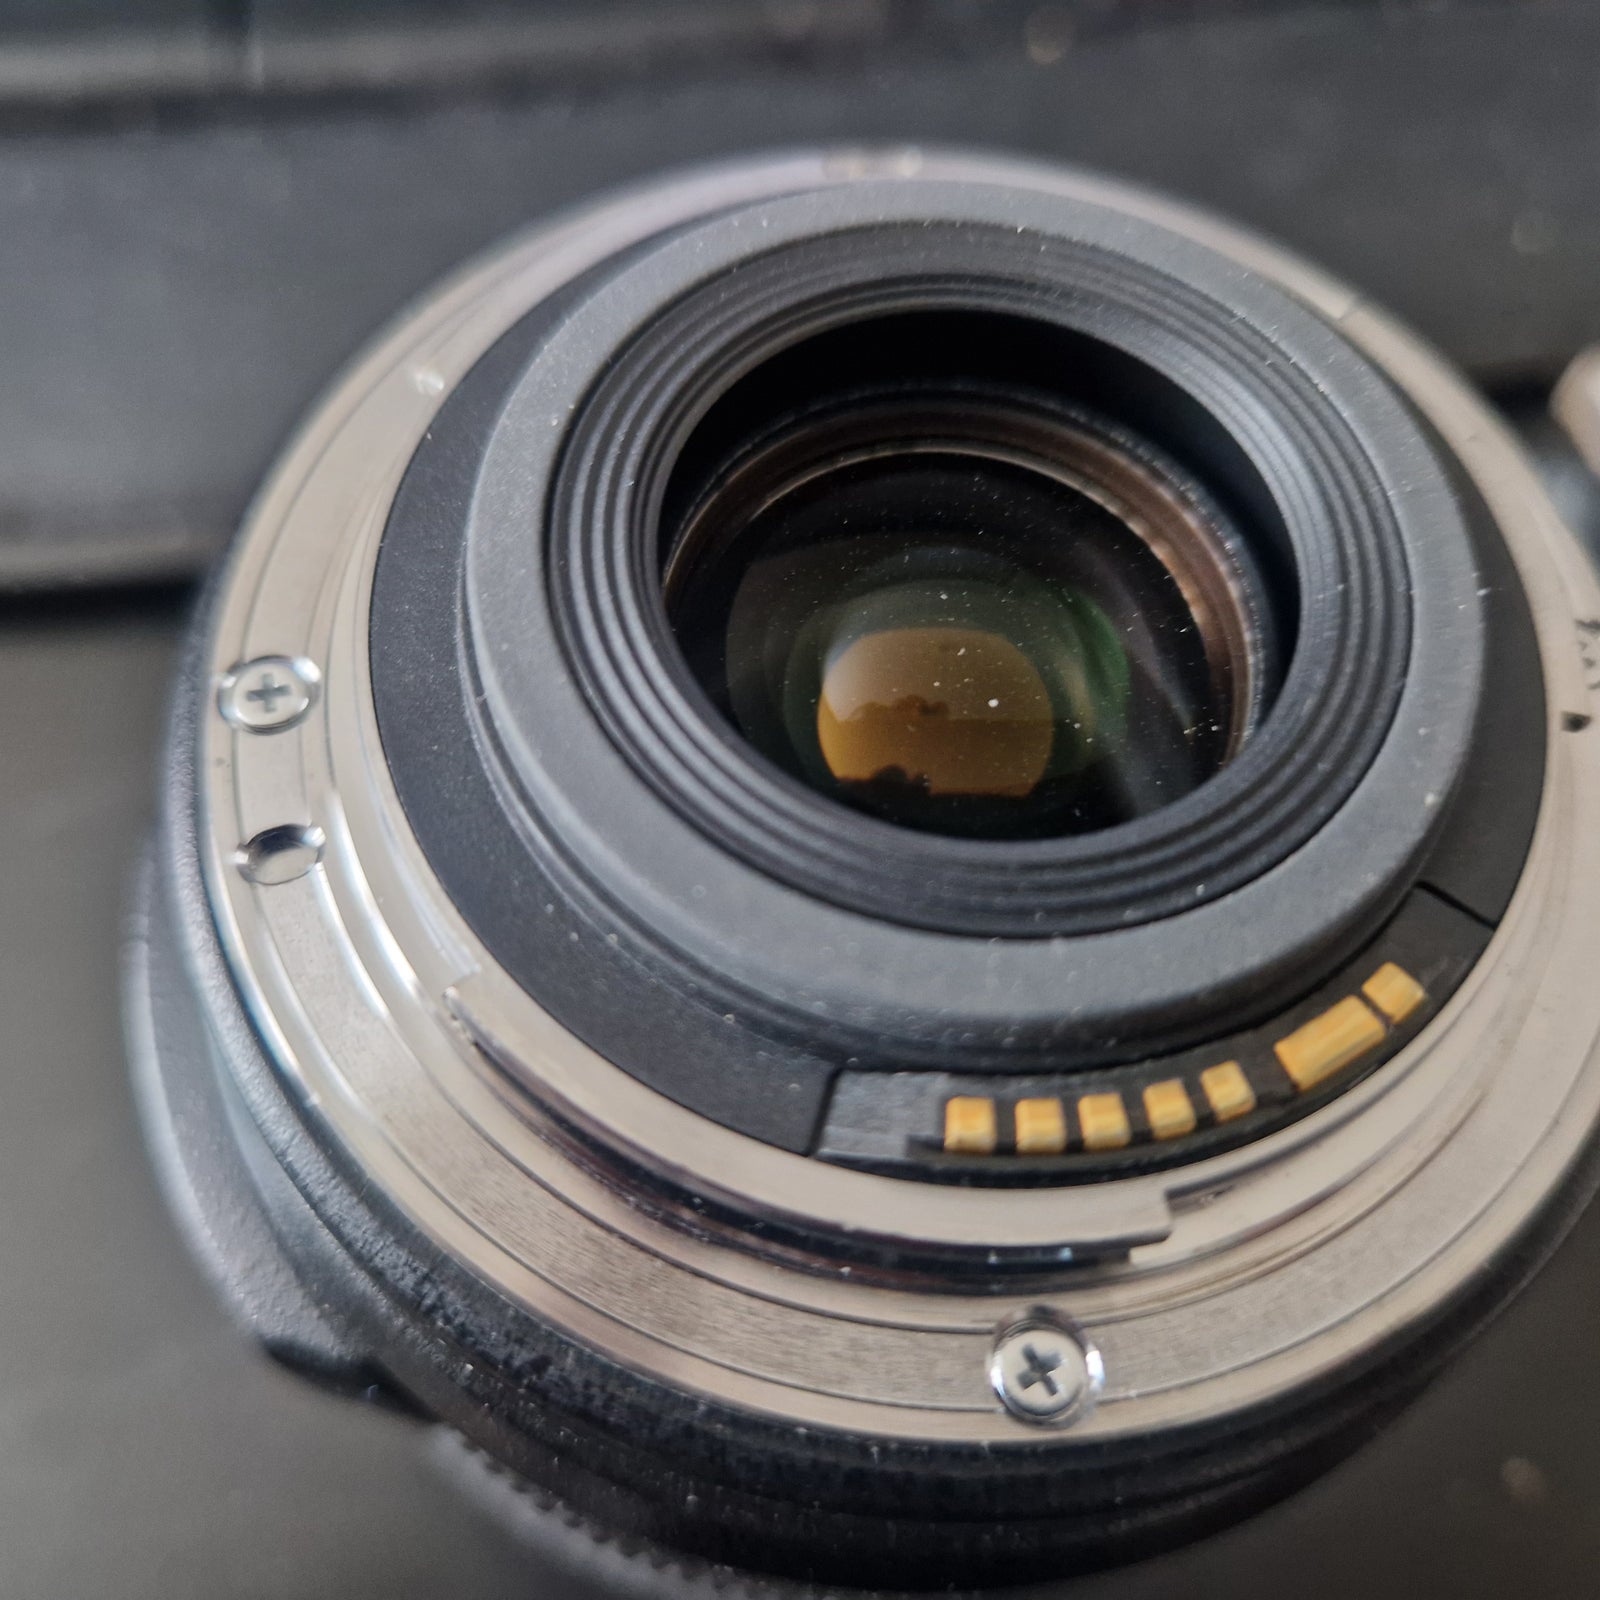 Zoomobjektiv, Canon, EF 17-85 IS USM